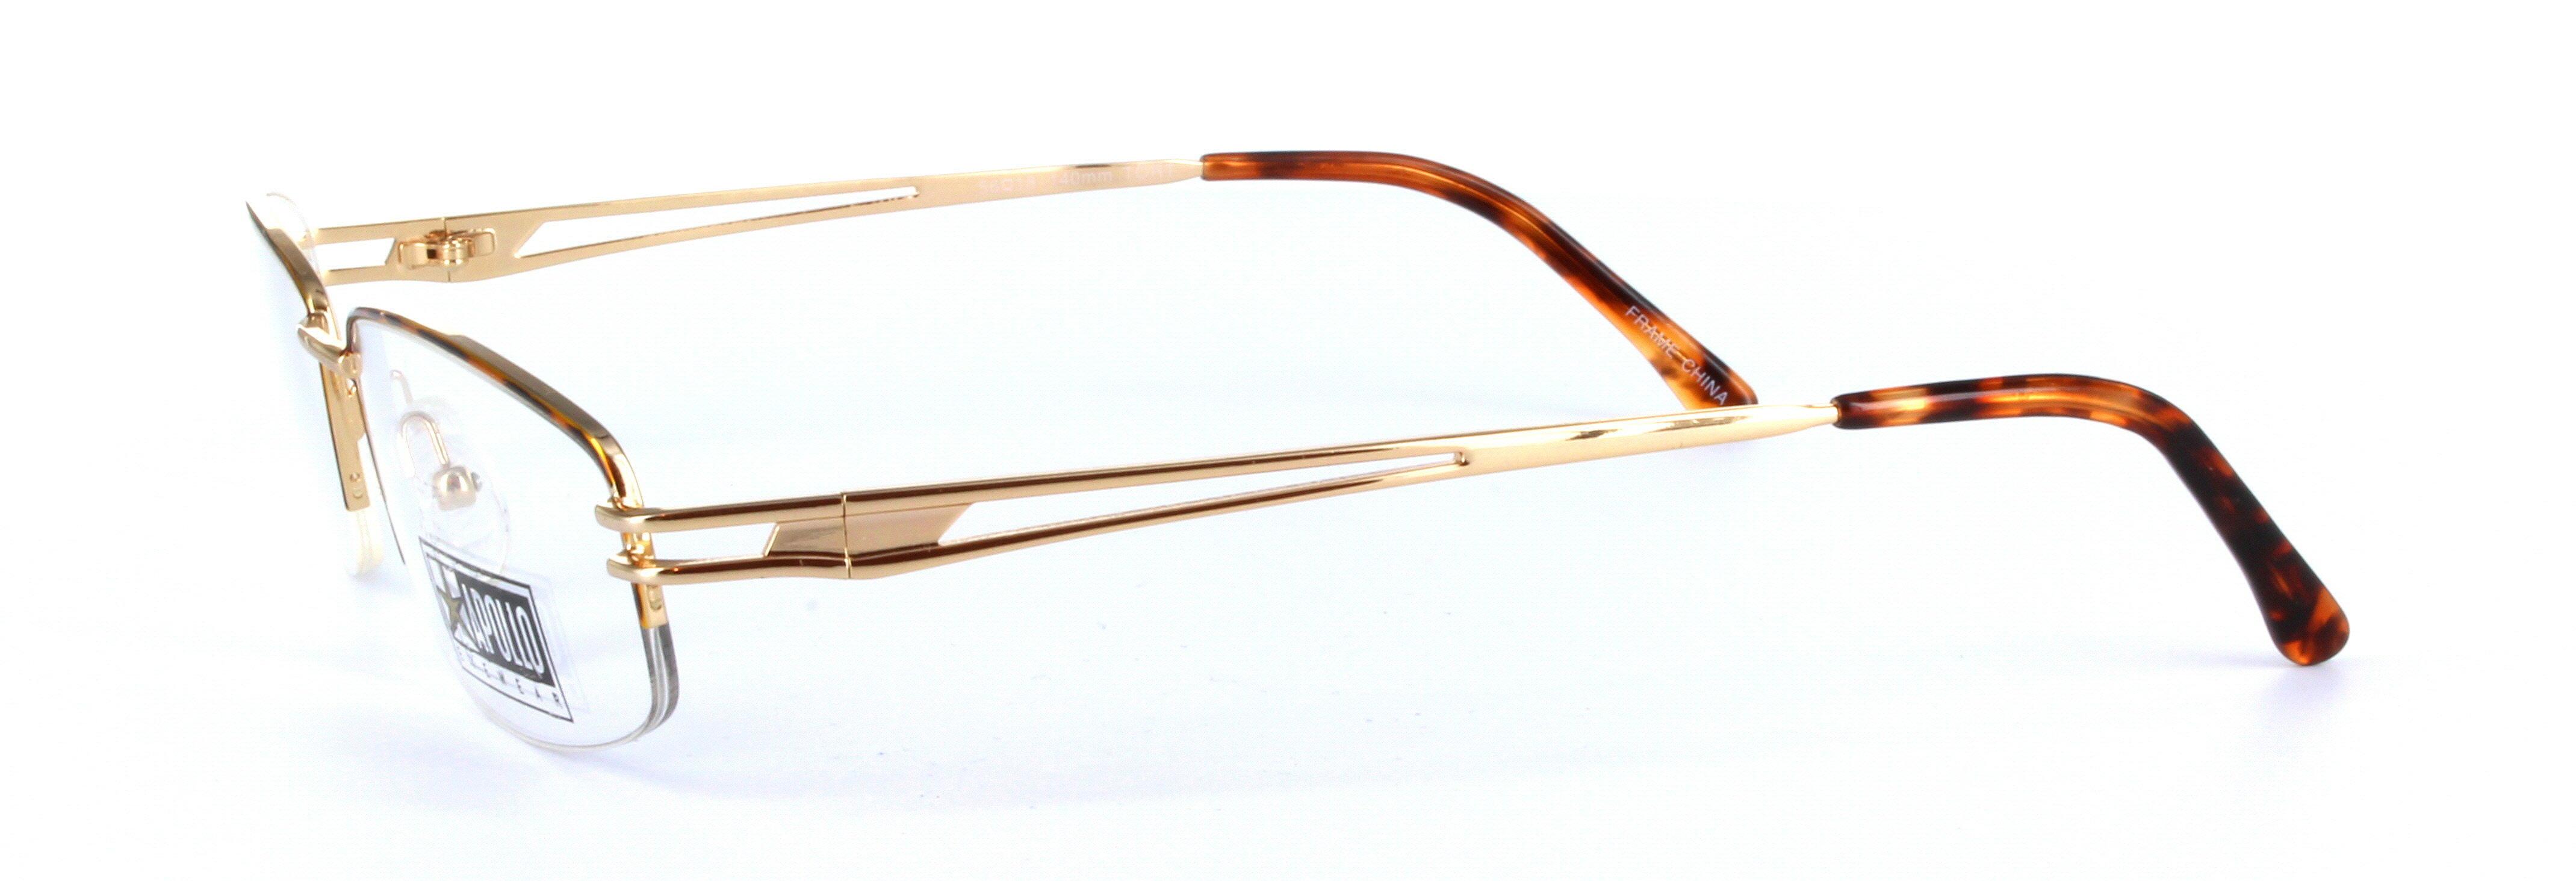 Cabernet Gold Semi Rimless Rectangular Metal Glasses - Image View 2